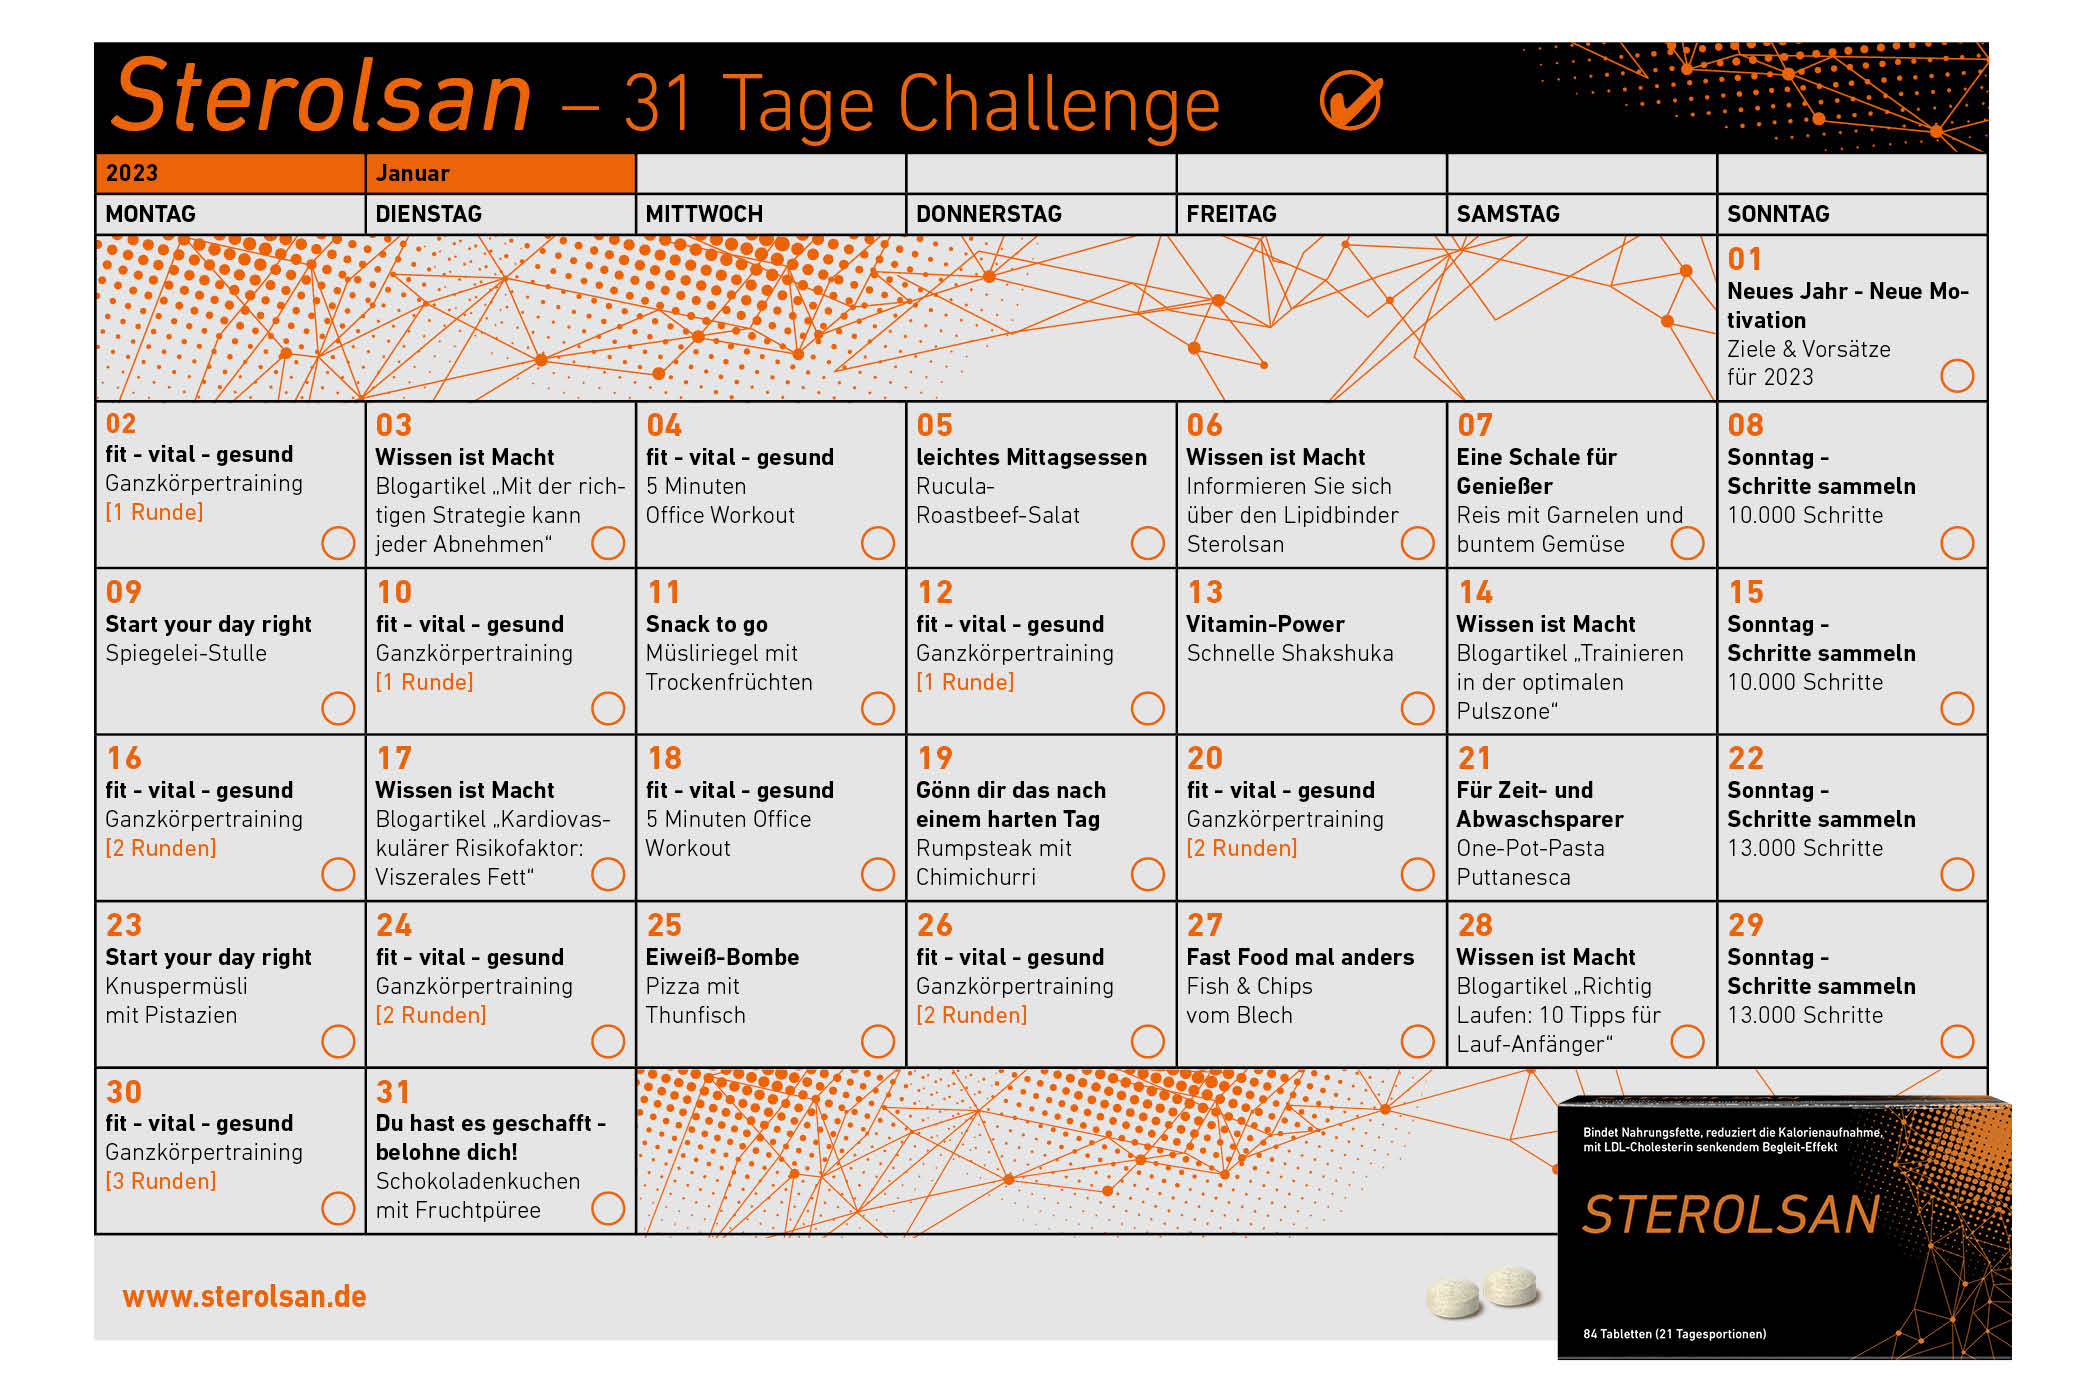 31 Tage Challenge - Sterolsan